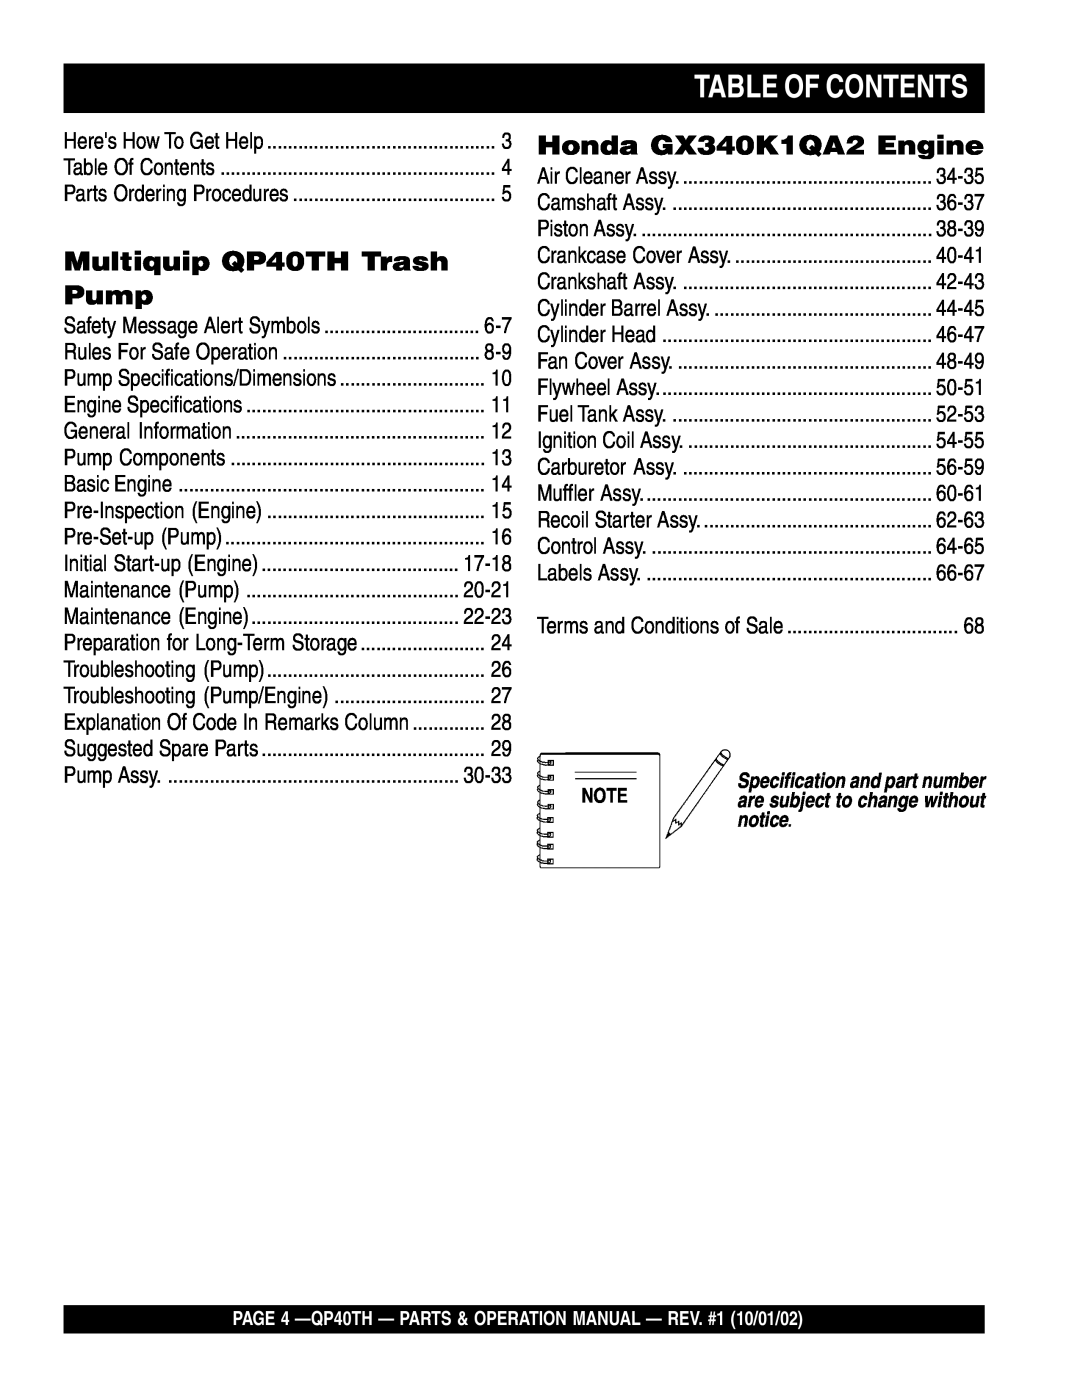 Multiquip operation manual Table Of Contents, Multiquip QP40TH Trash, Pump, Honda GX340K1QA2 Engine 